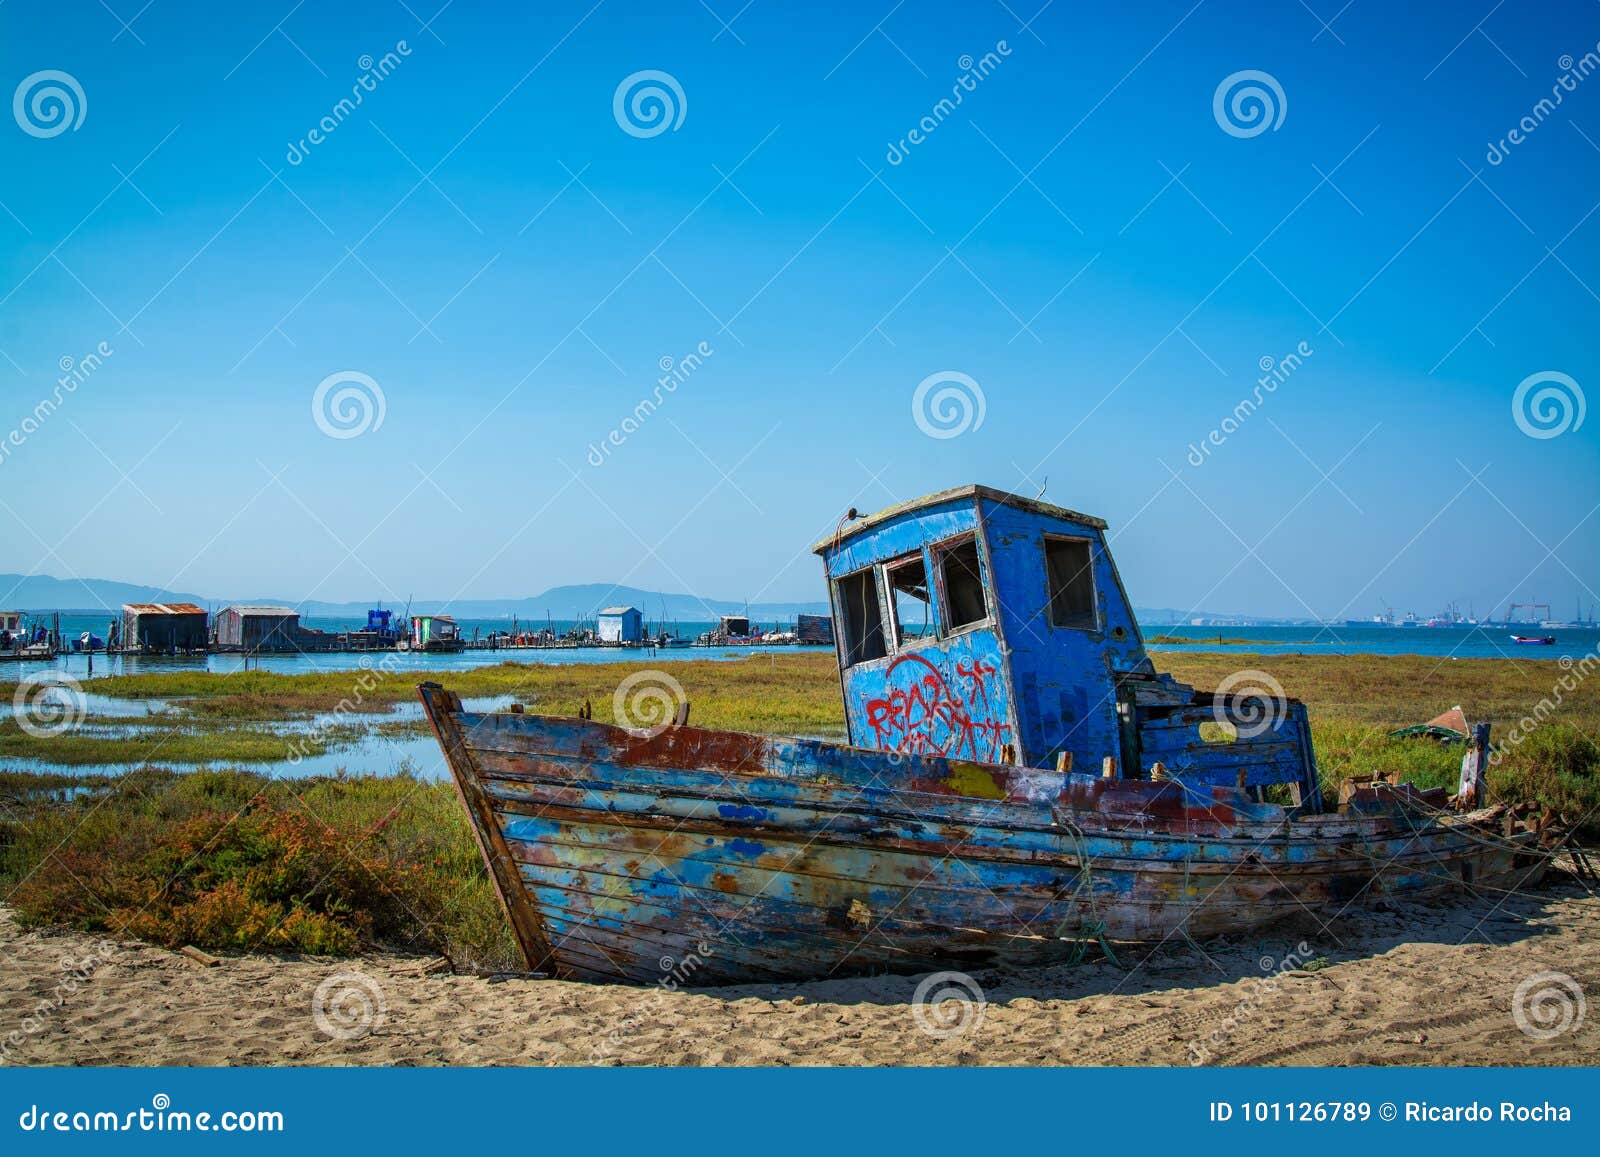 Old fishing boat stock image. Image of traditional, coast - 101126789